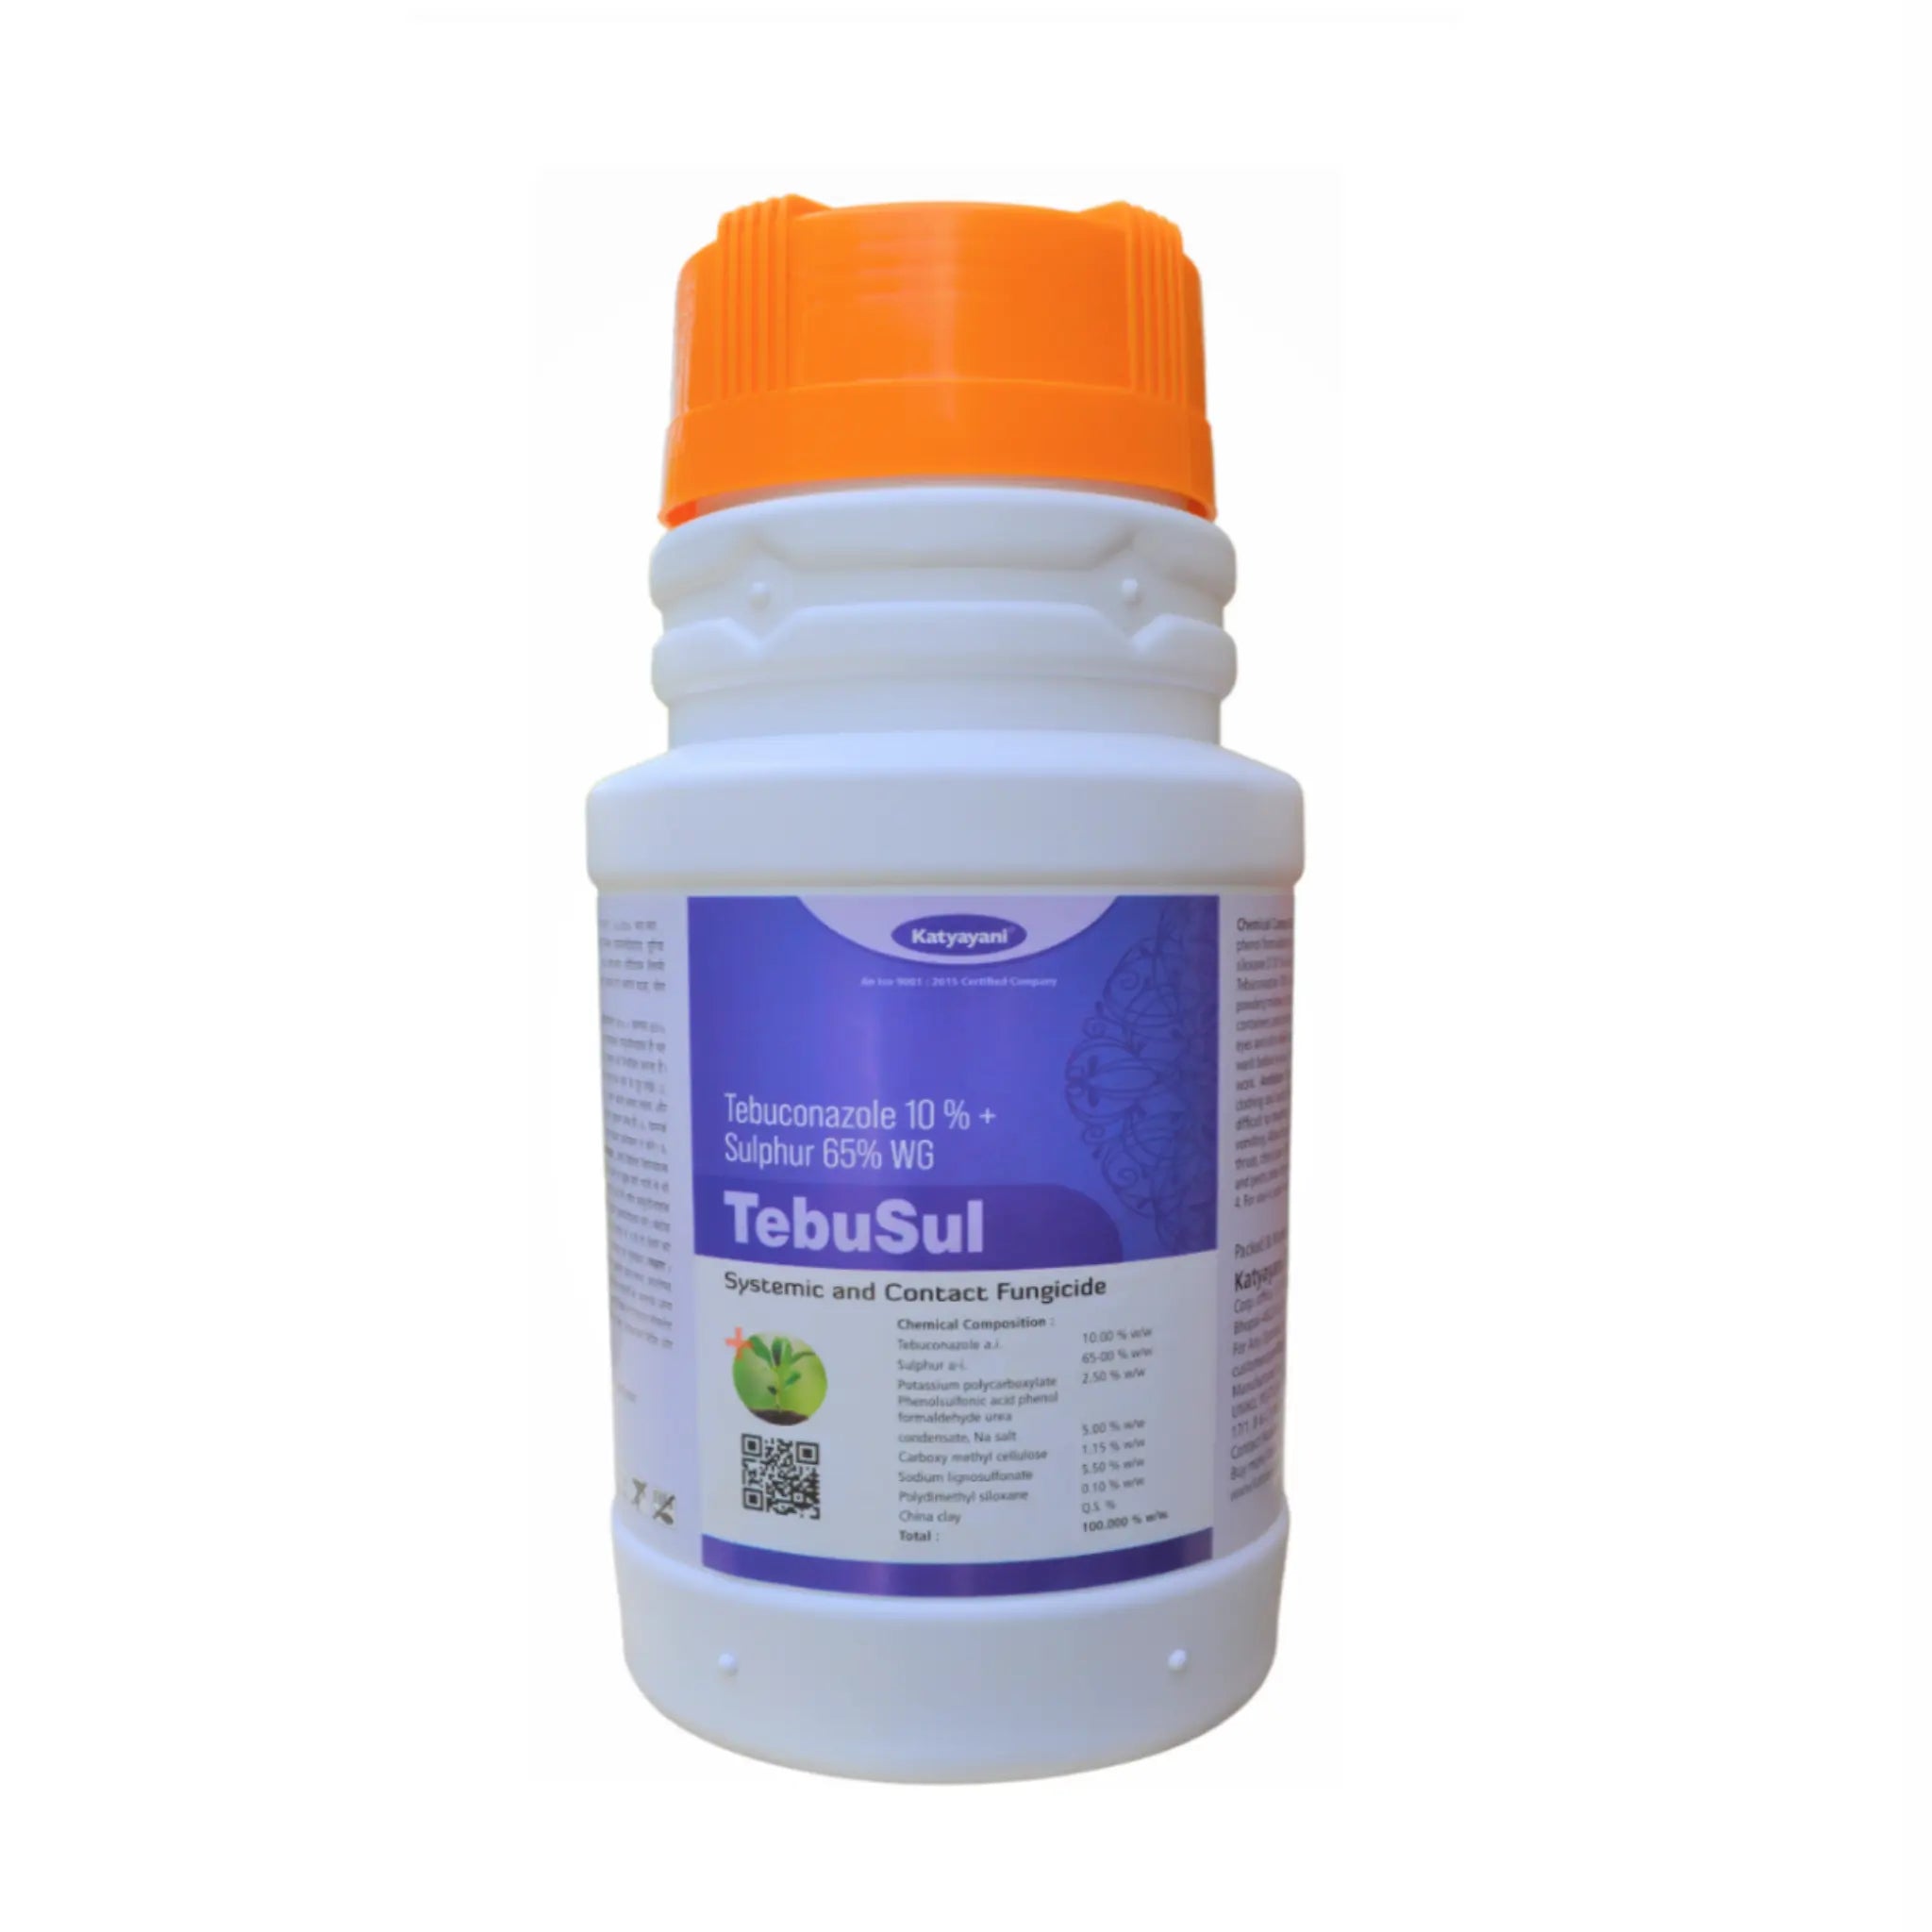 Katyayani Tebusul | Tebuconazole 10 % + sulphur 65 % WG | Chemical Fungicide